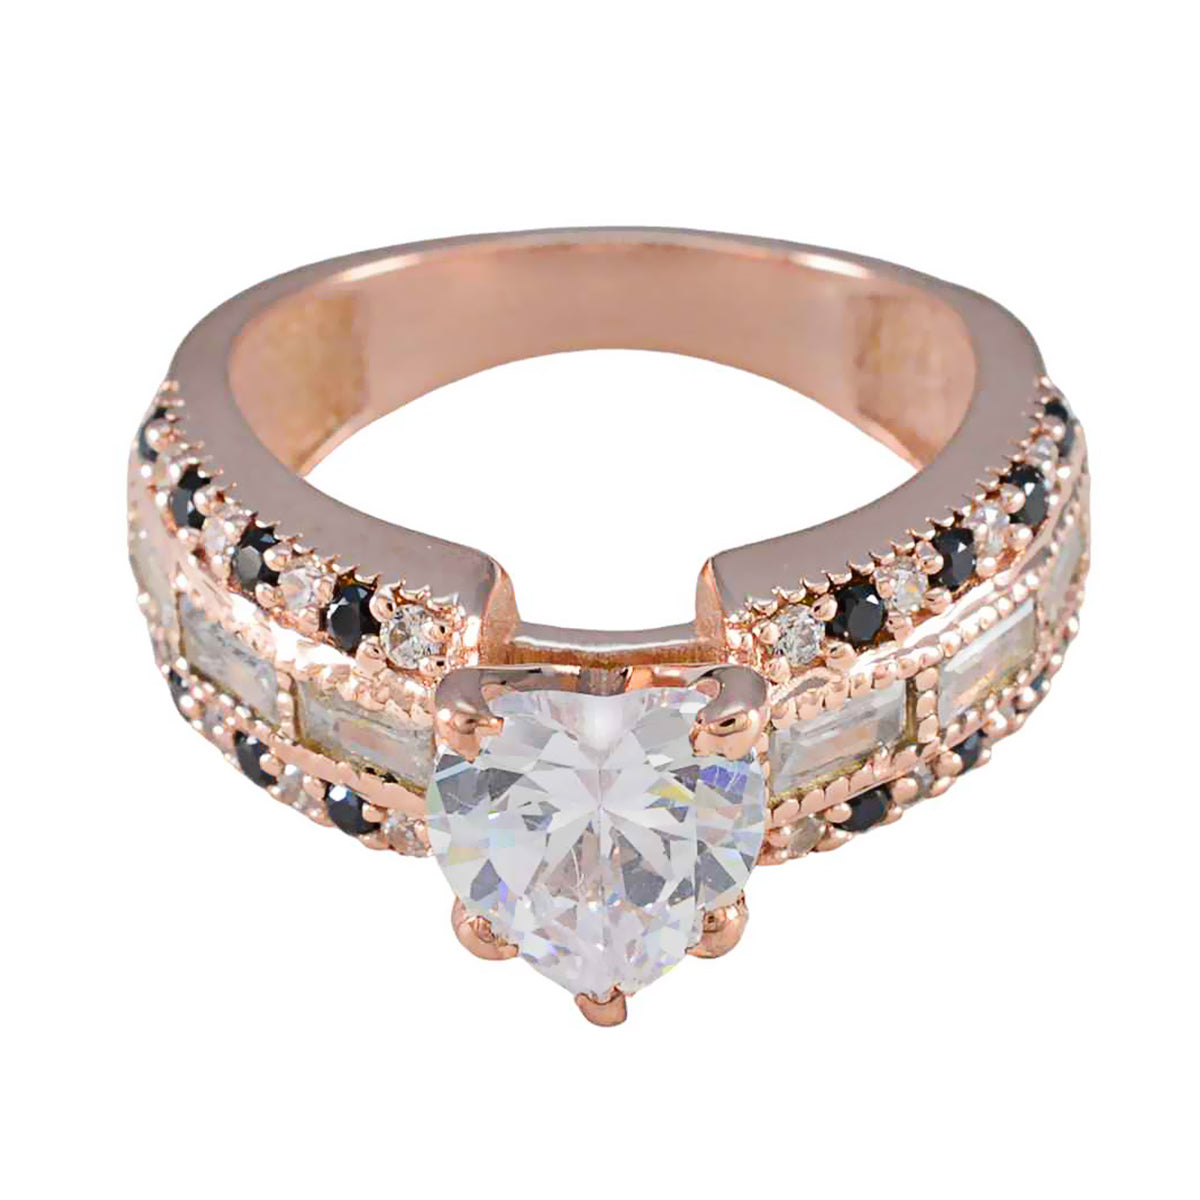 Anillo de plata completo riyo con chapado en oro rosa, piedra de zafiro azul, ajuste de punta en forma de corazón, joyería personalizada, anillo de Pascua